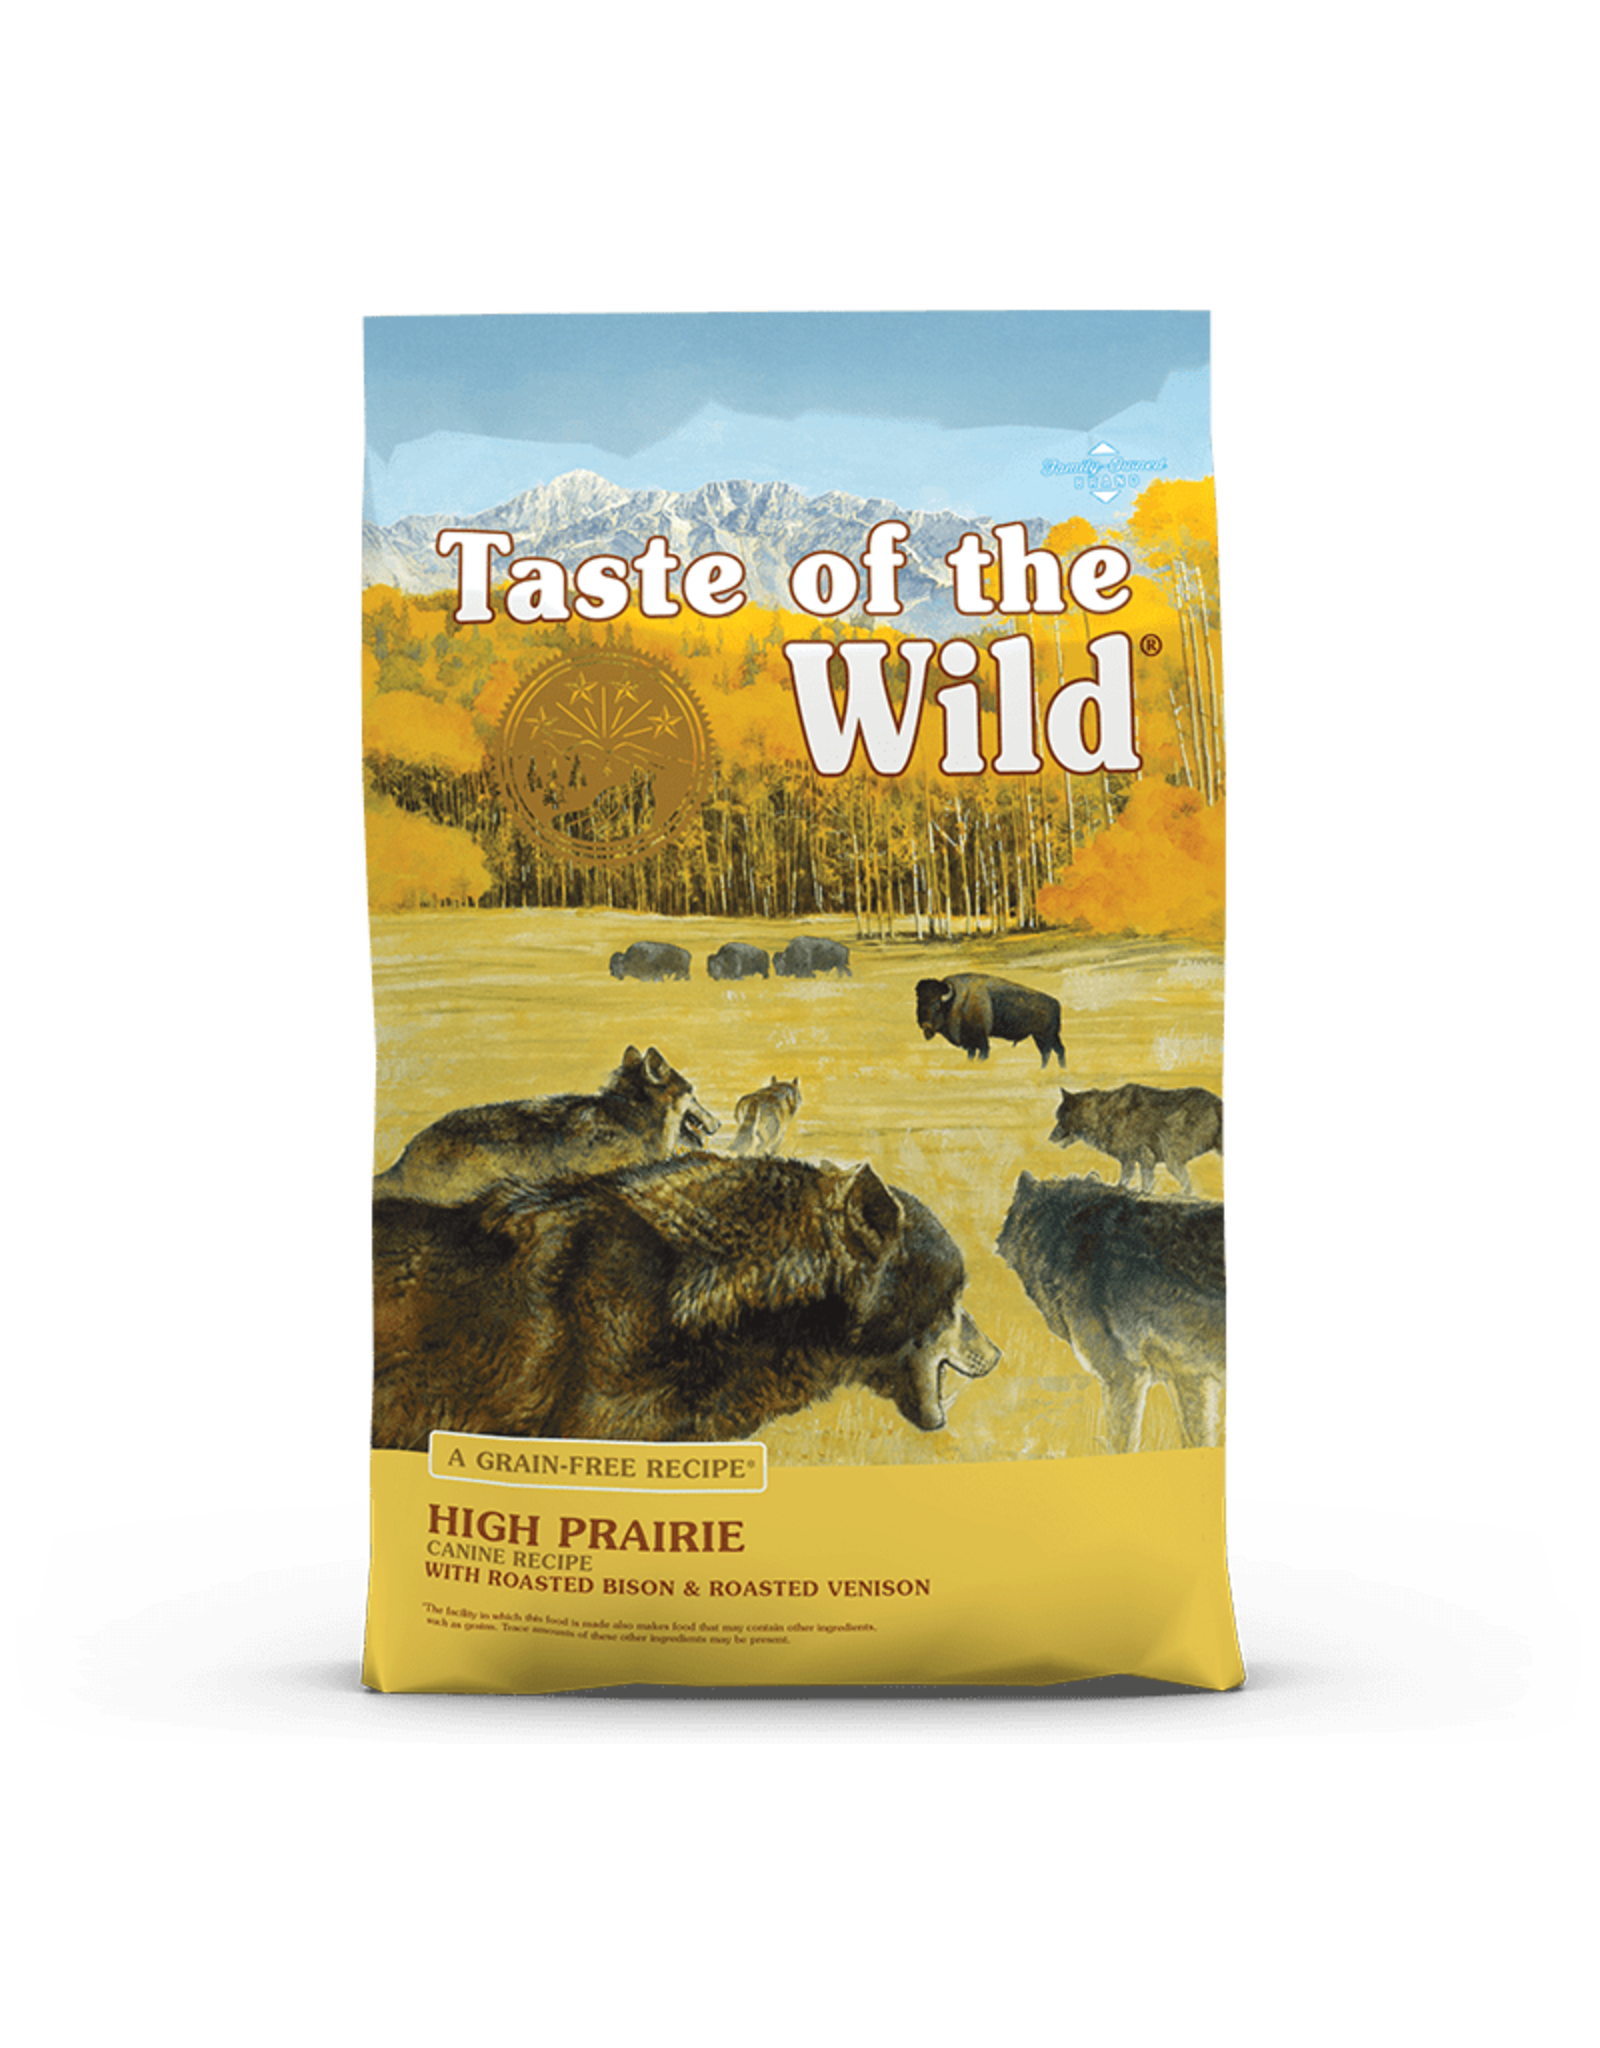 Taste of the Wild Taste of the Wild High Prairie Grain-Free Canine Recipe